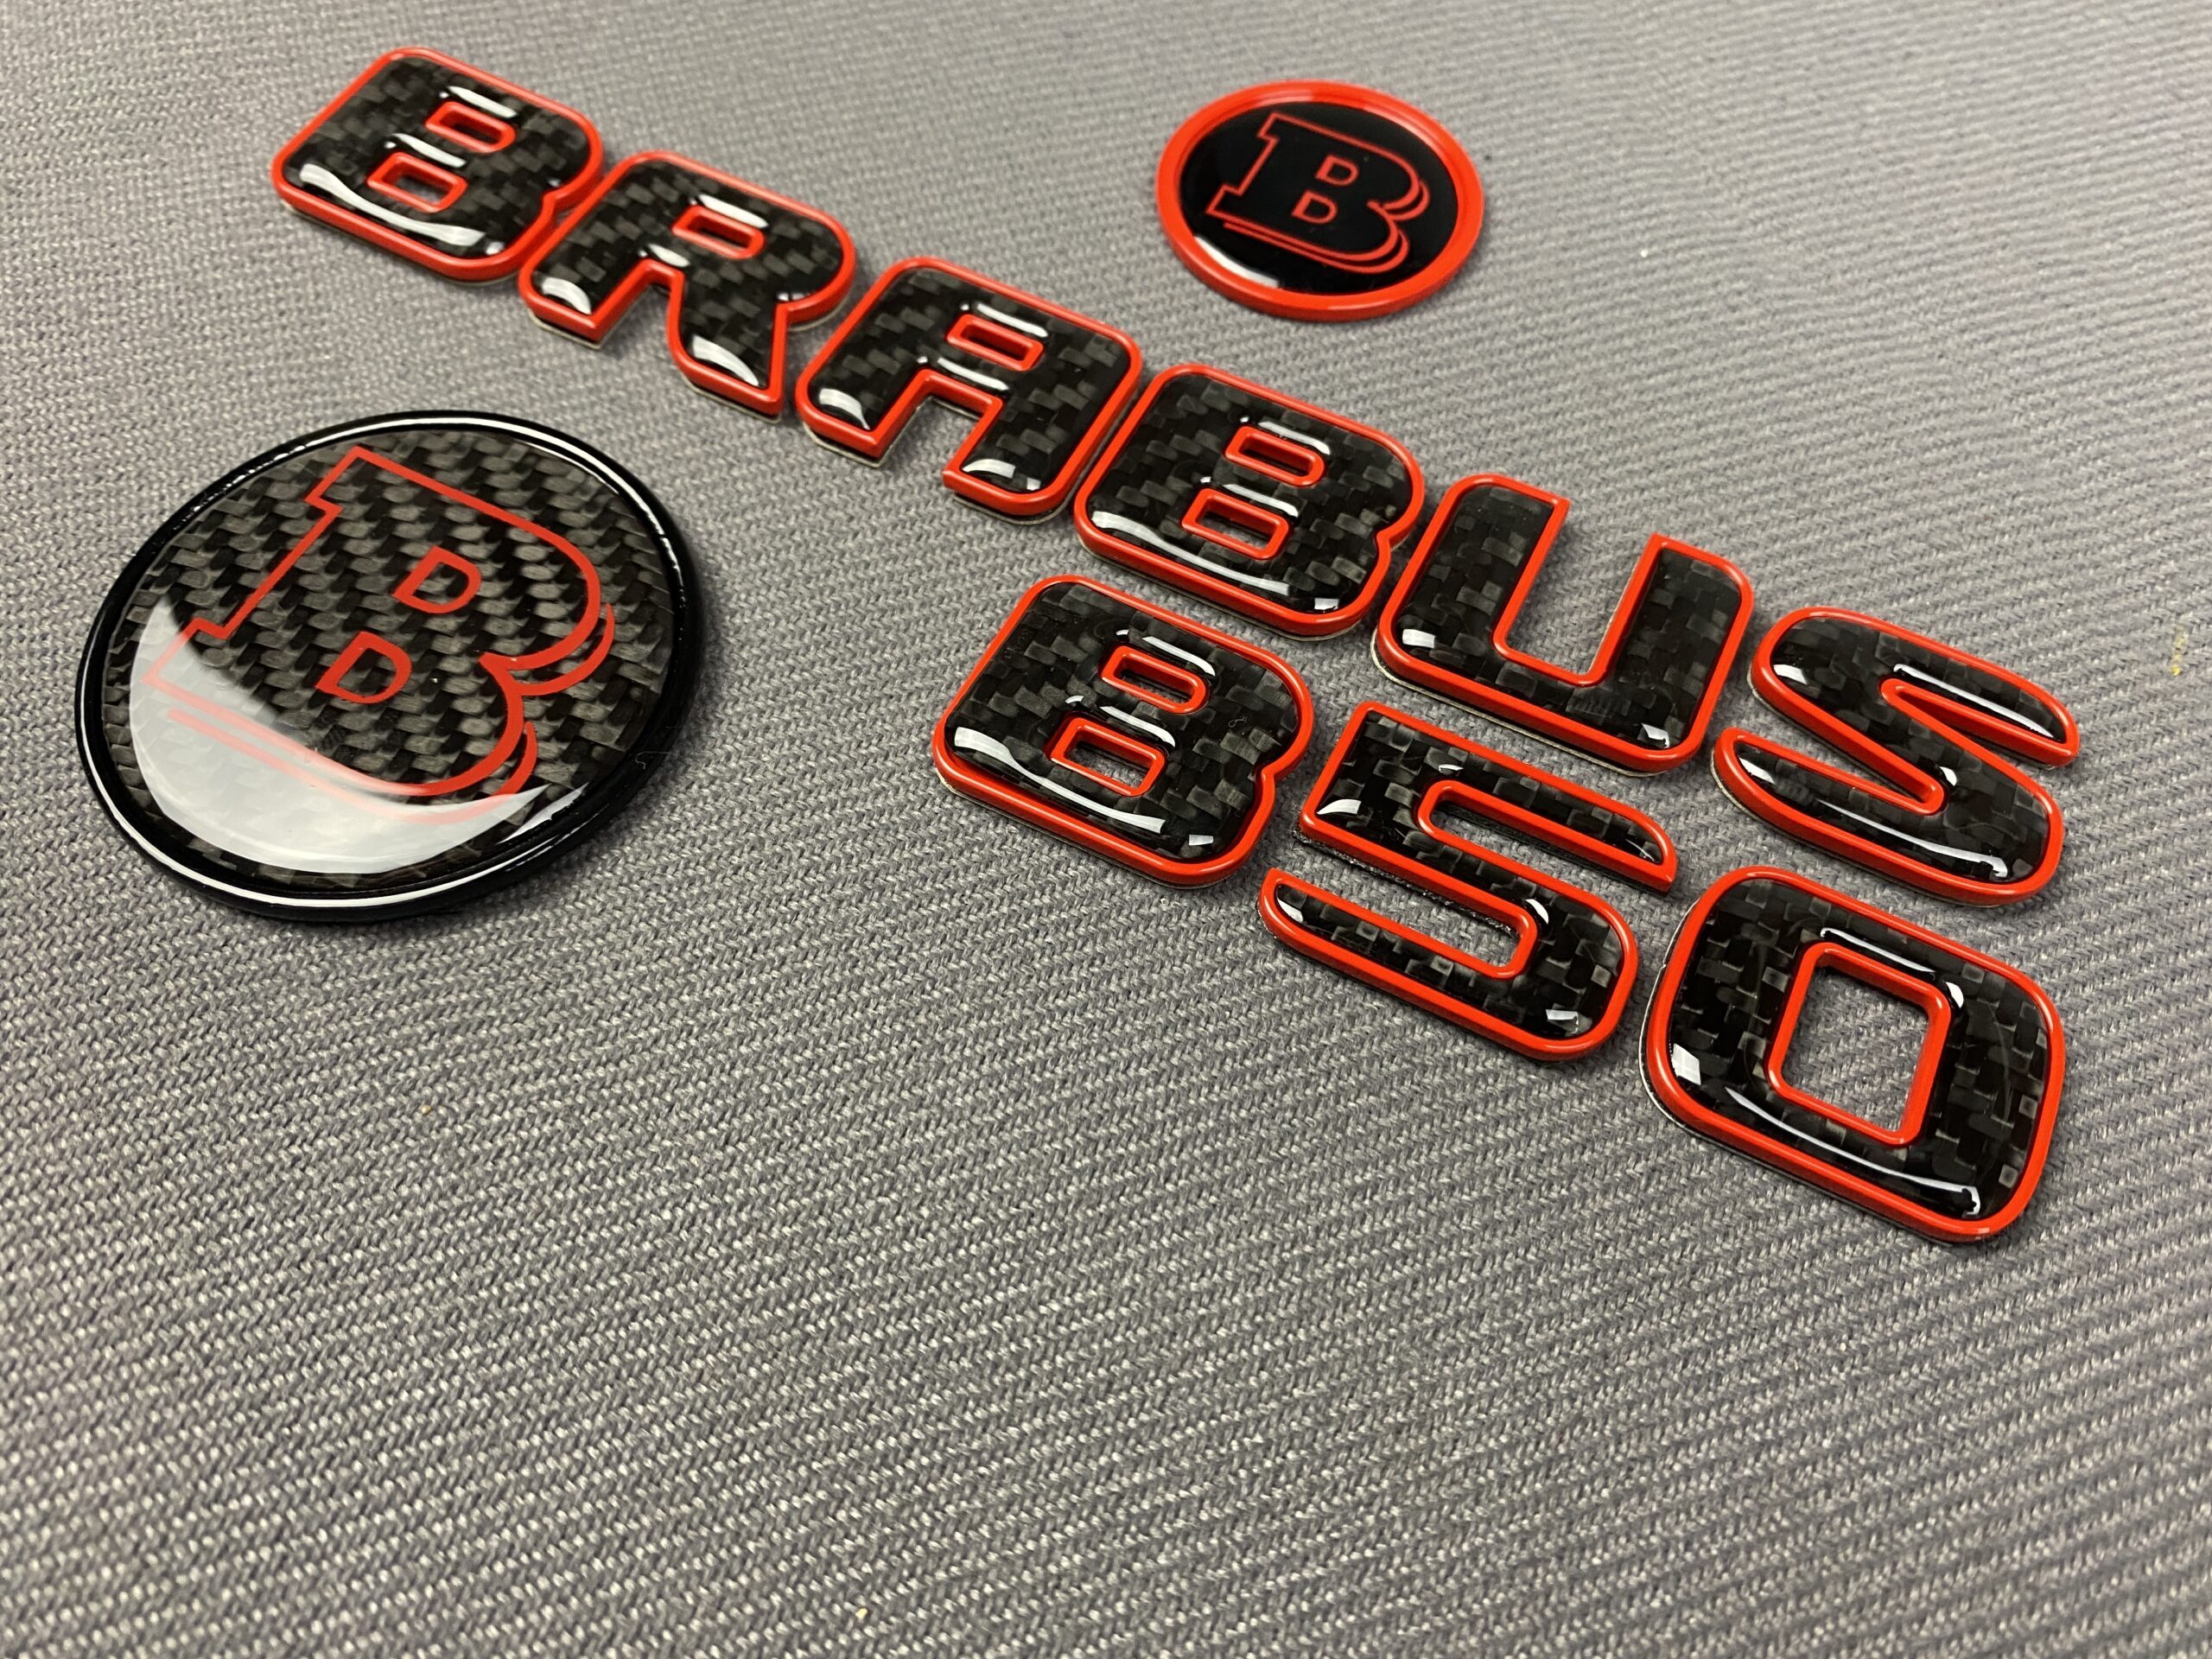 Matte Black Brabus Emblems Badge Decal Stickers Logo for Mercedes Benz,Pack  of 2 : : Car & Motorbike